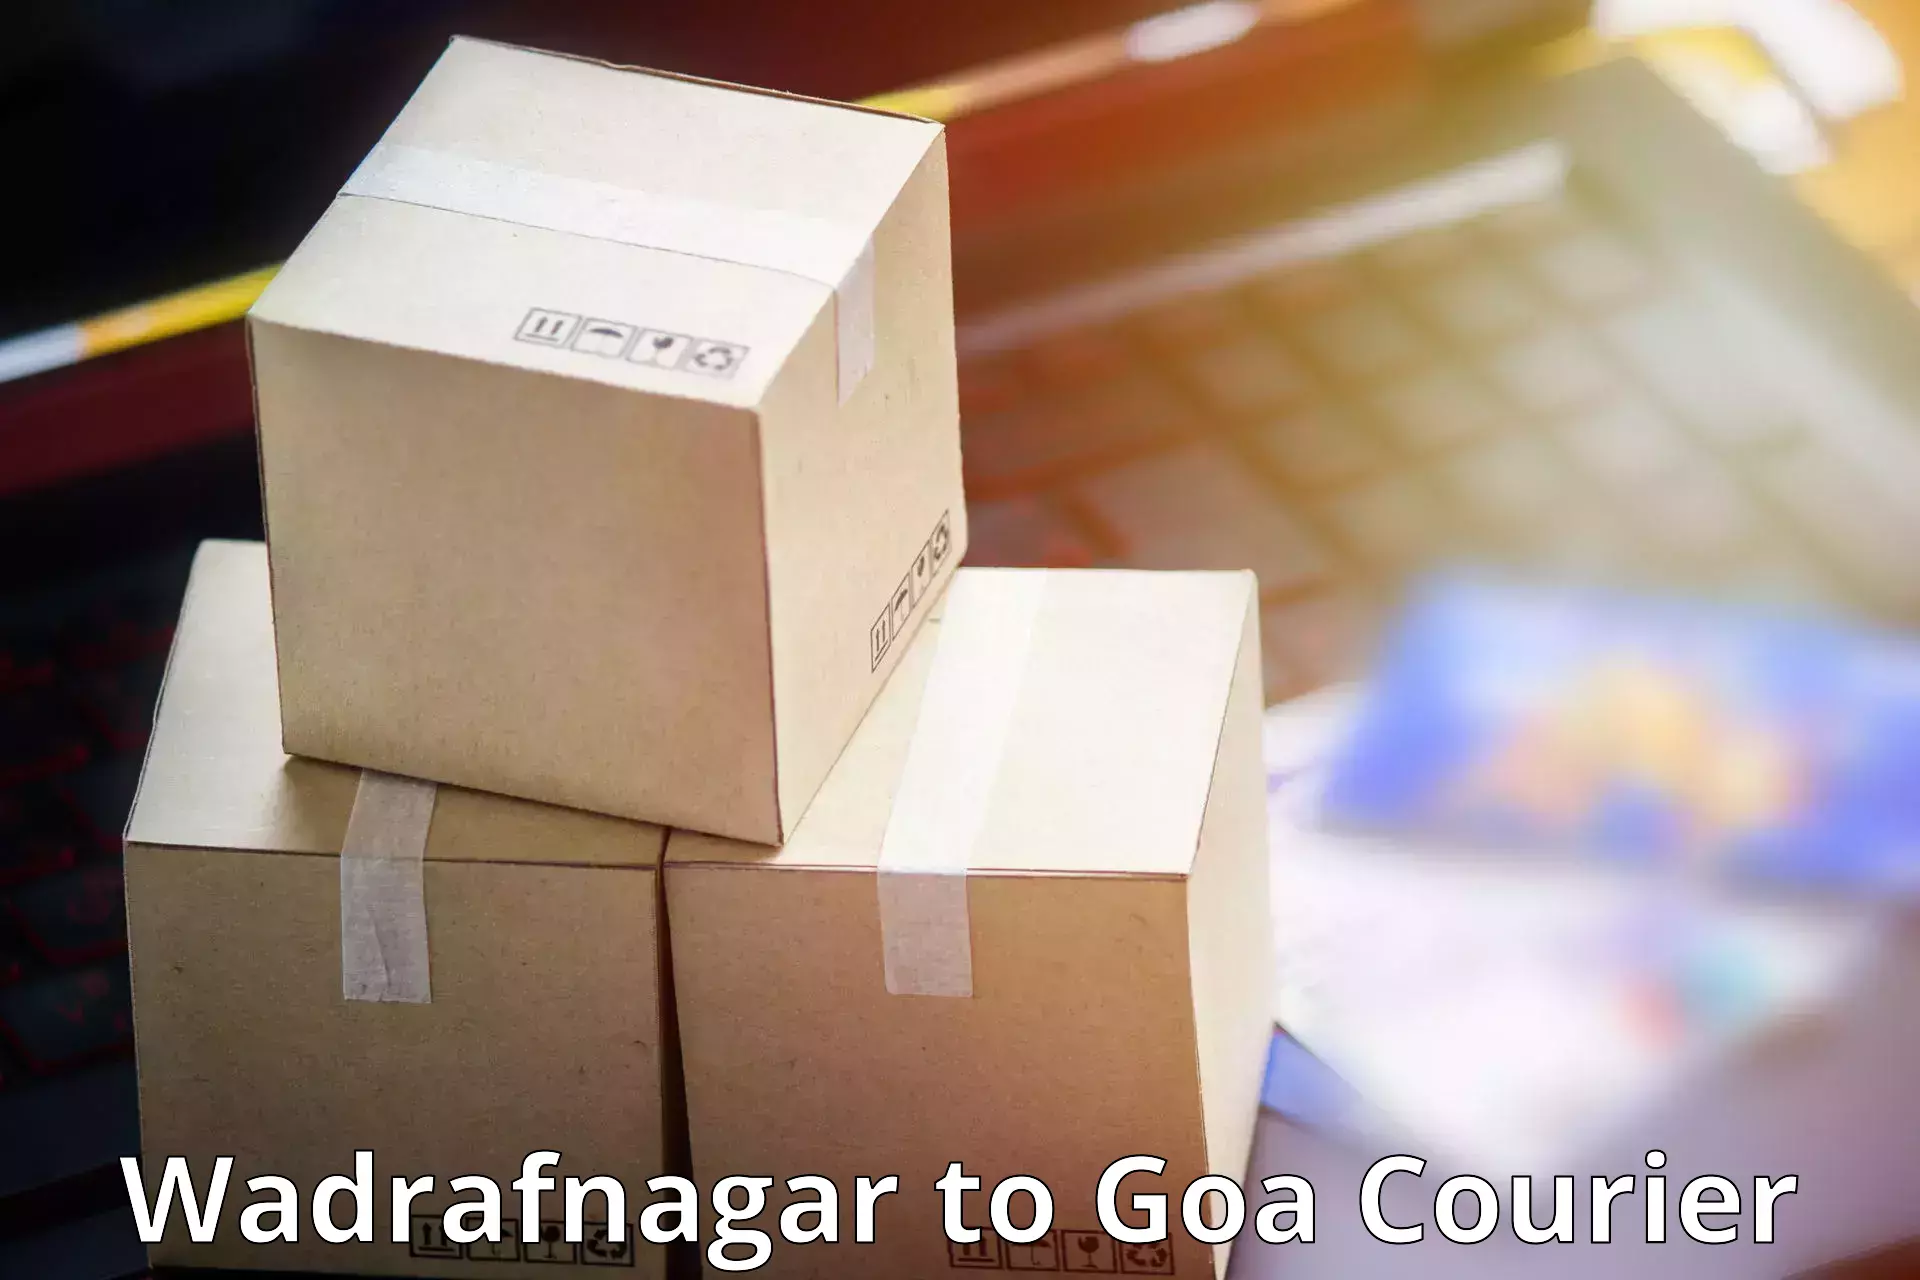 Professional parcel services Wadrafnagar to Vasco da Gama